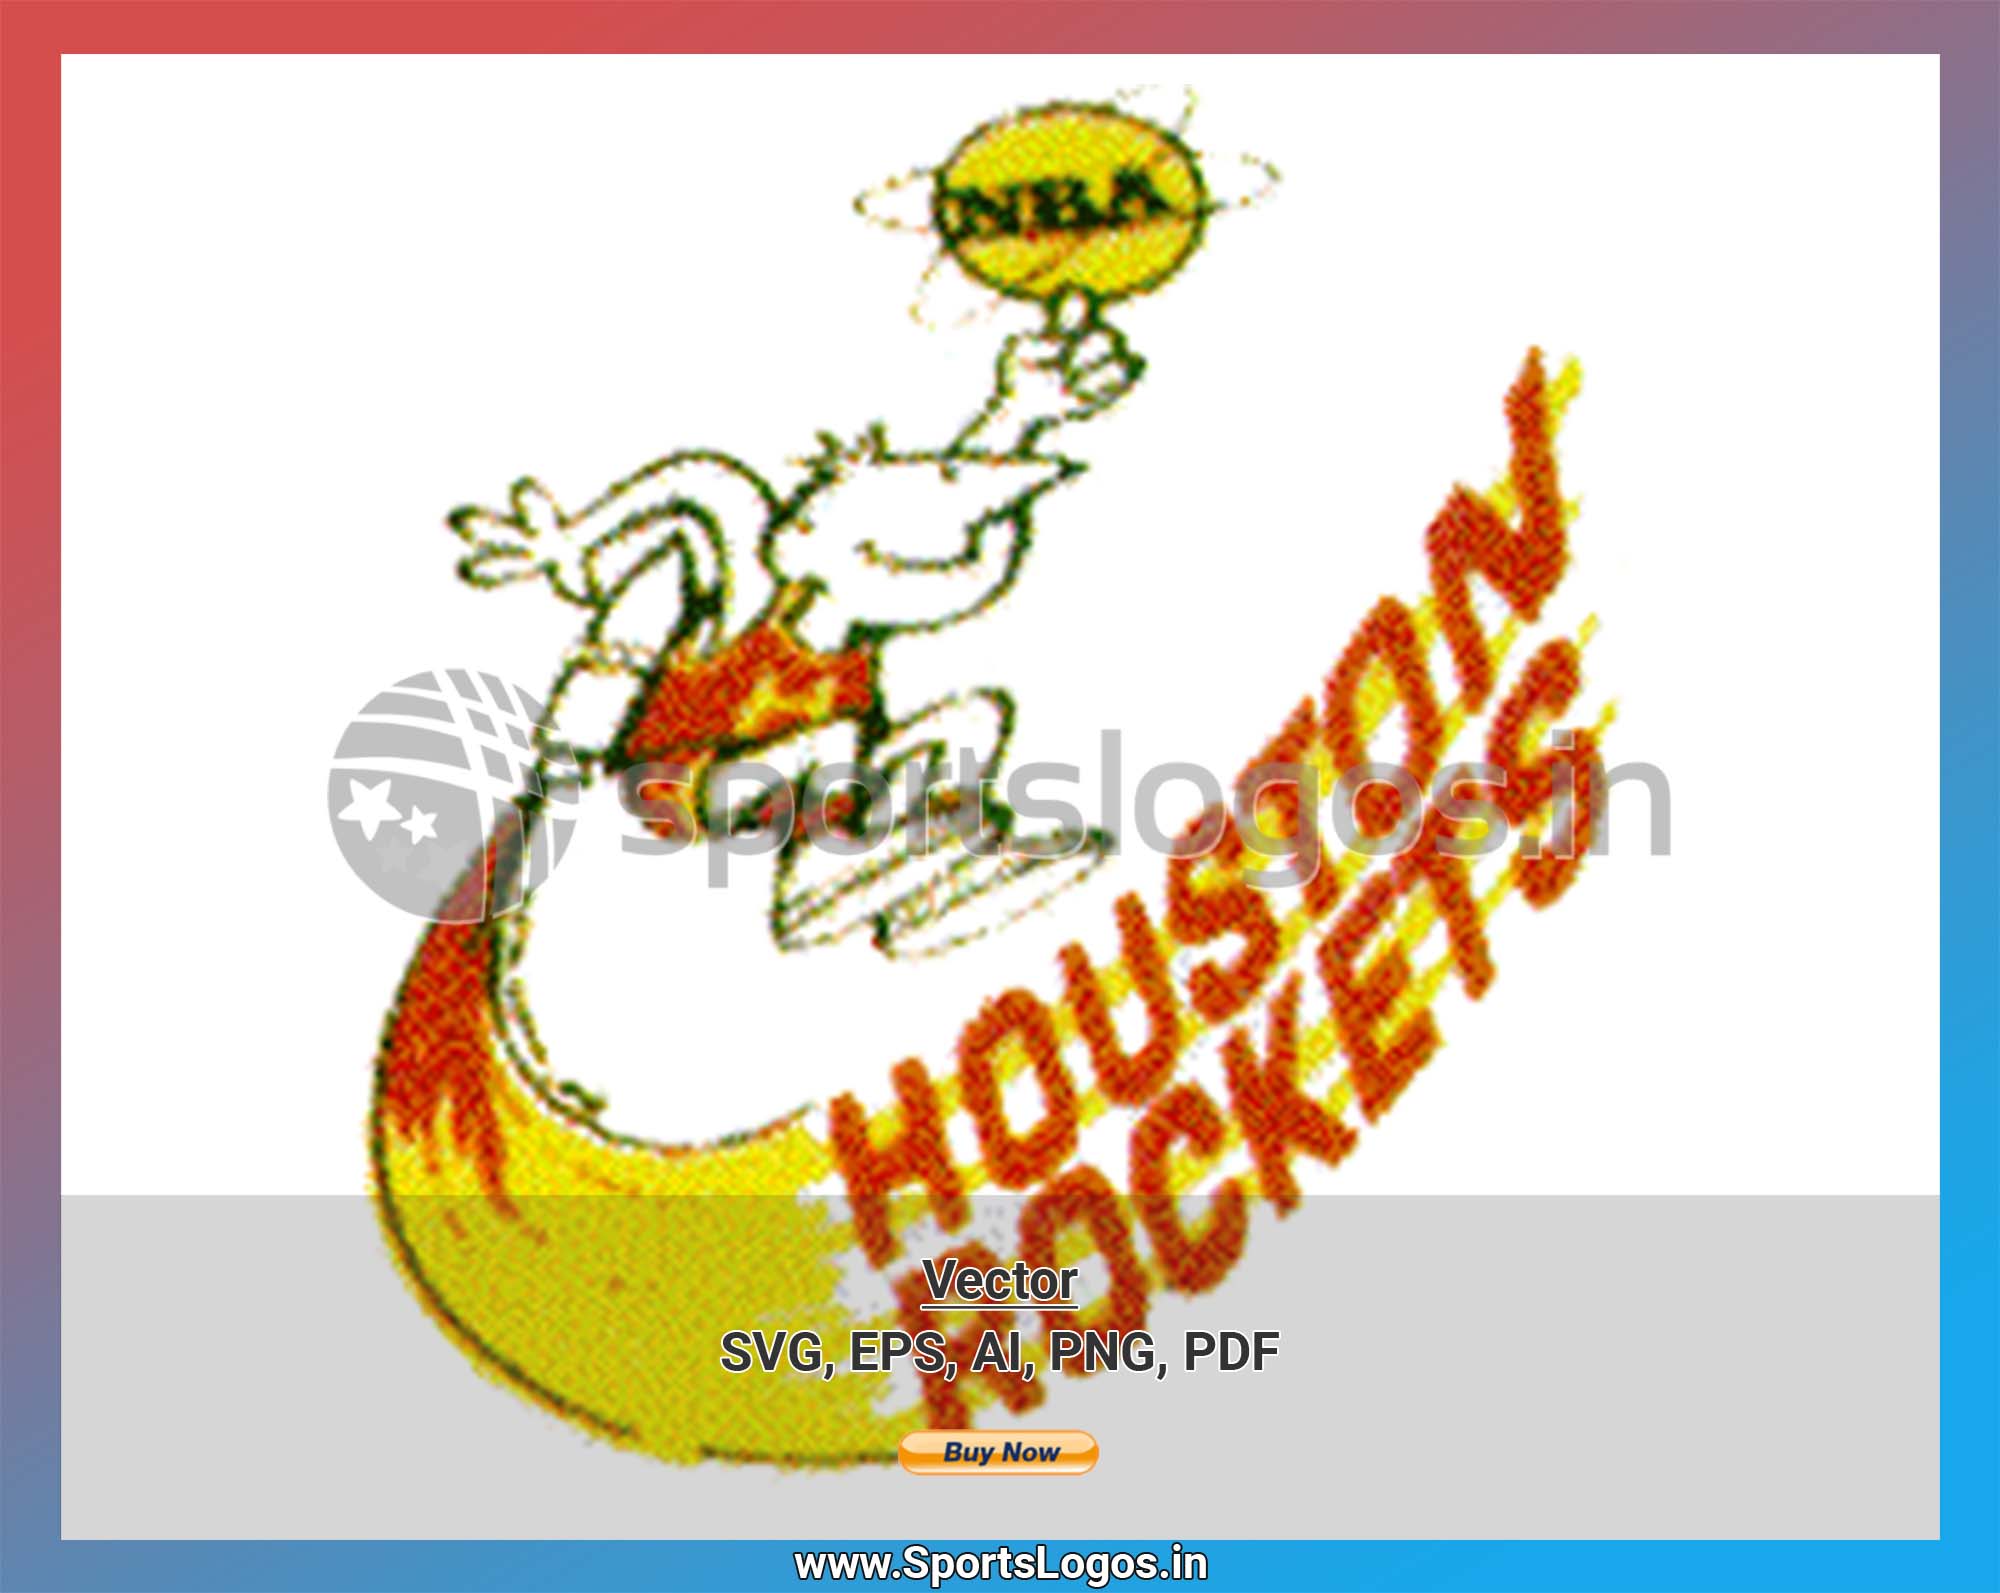 Houston Rockets Team SVG, Logo Houston Rockets Basketball